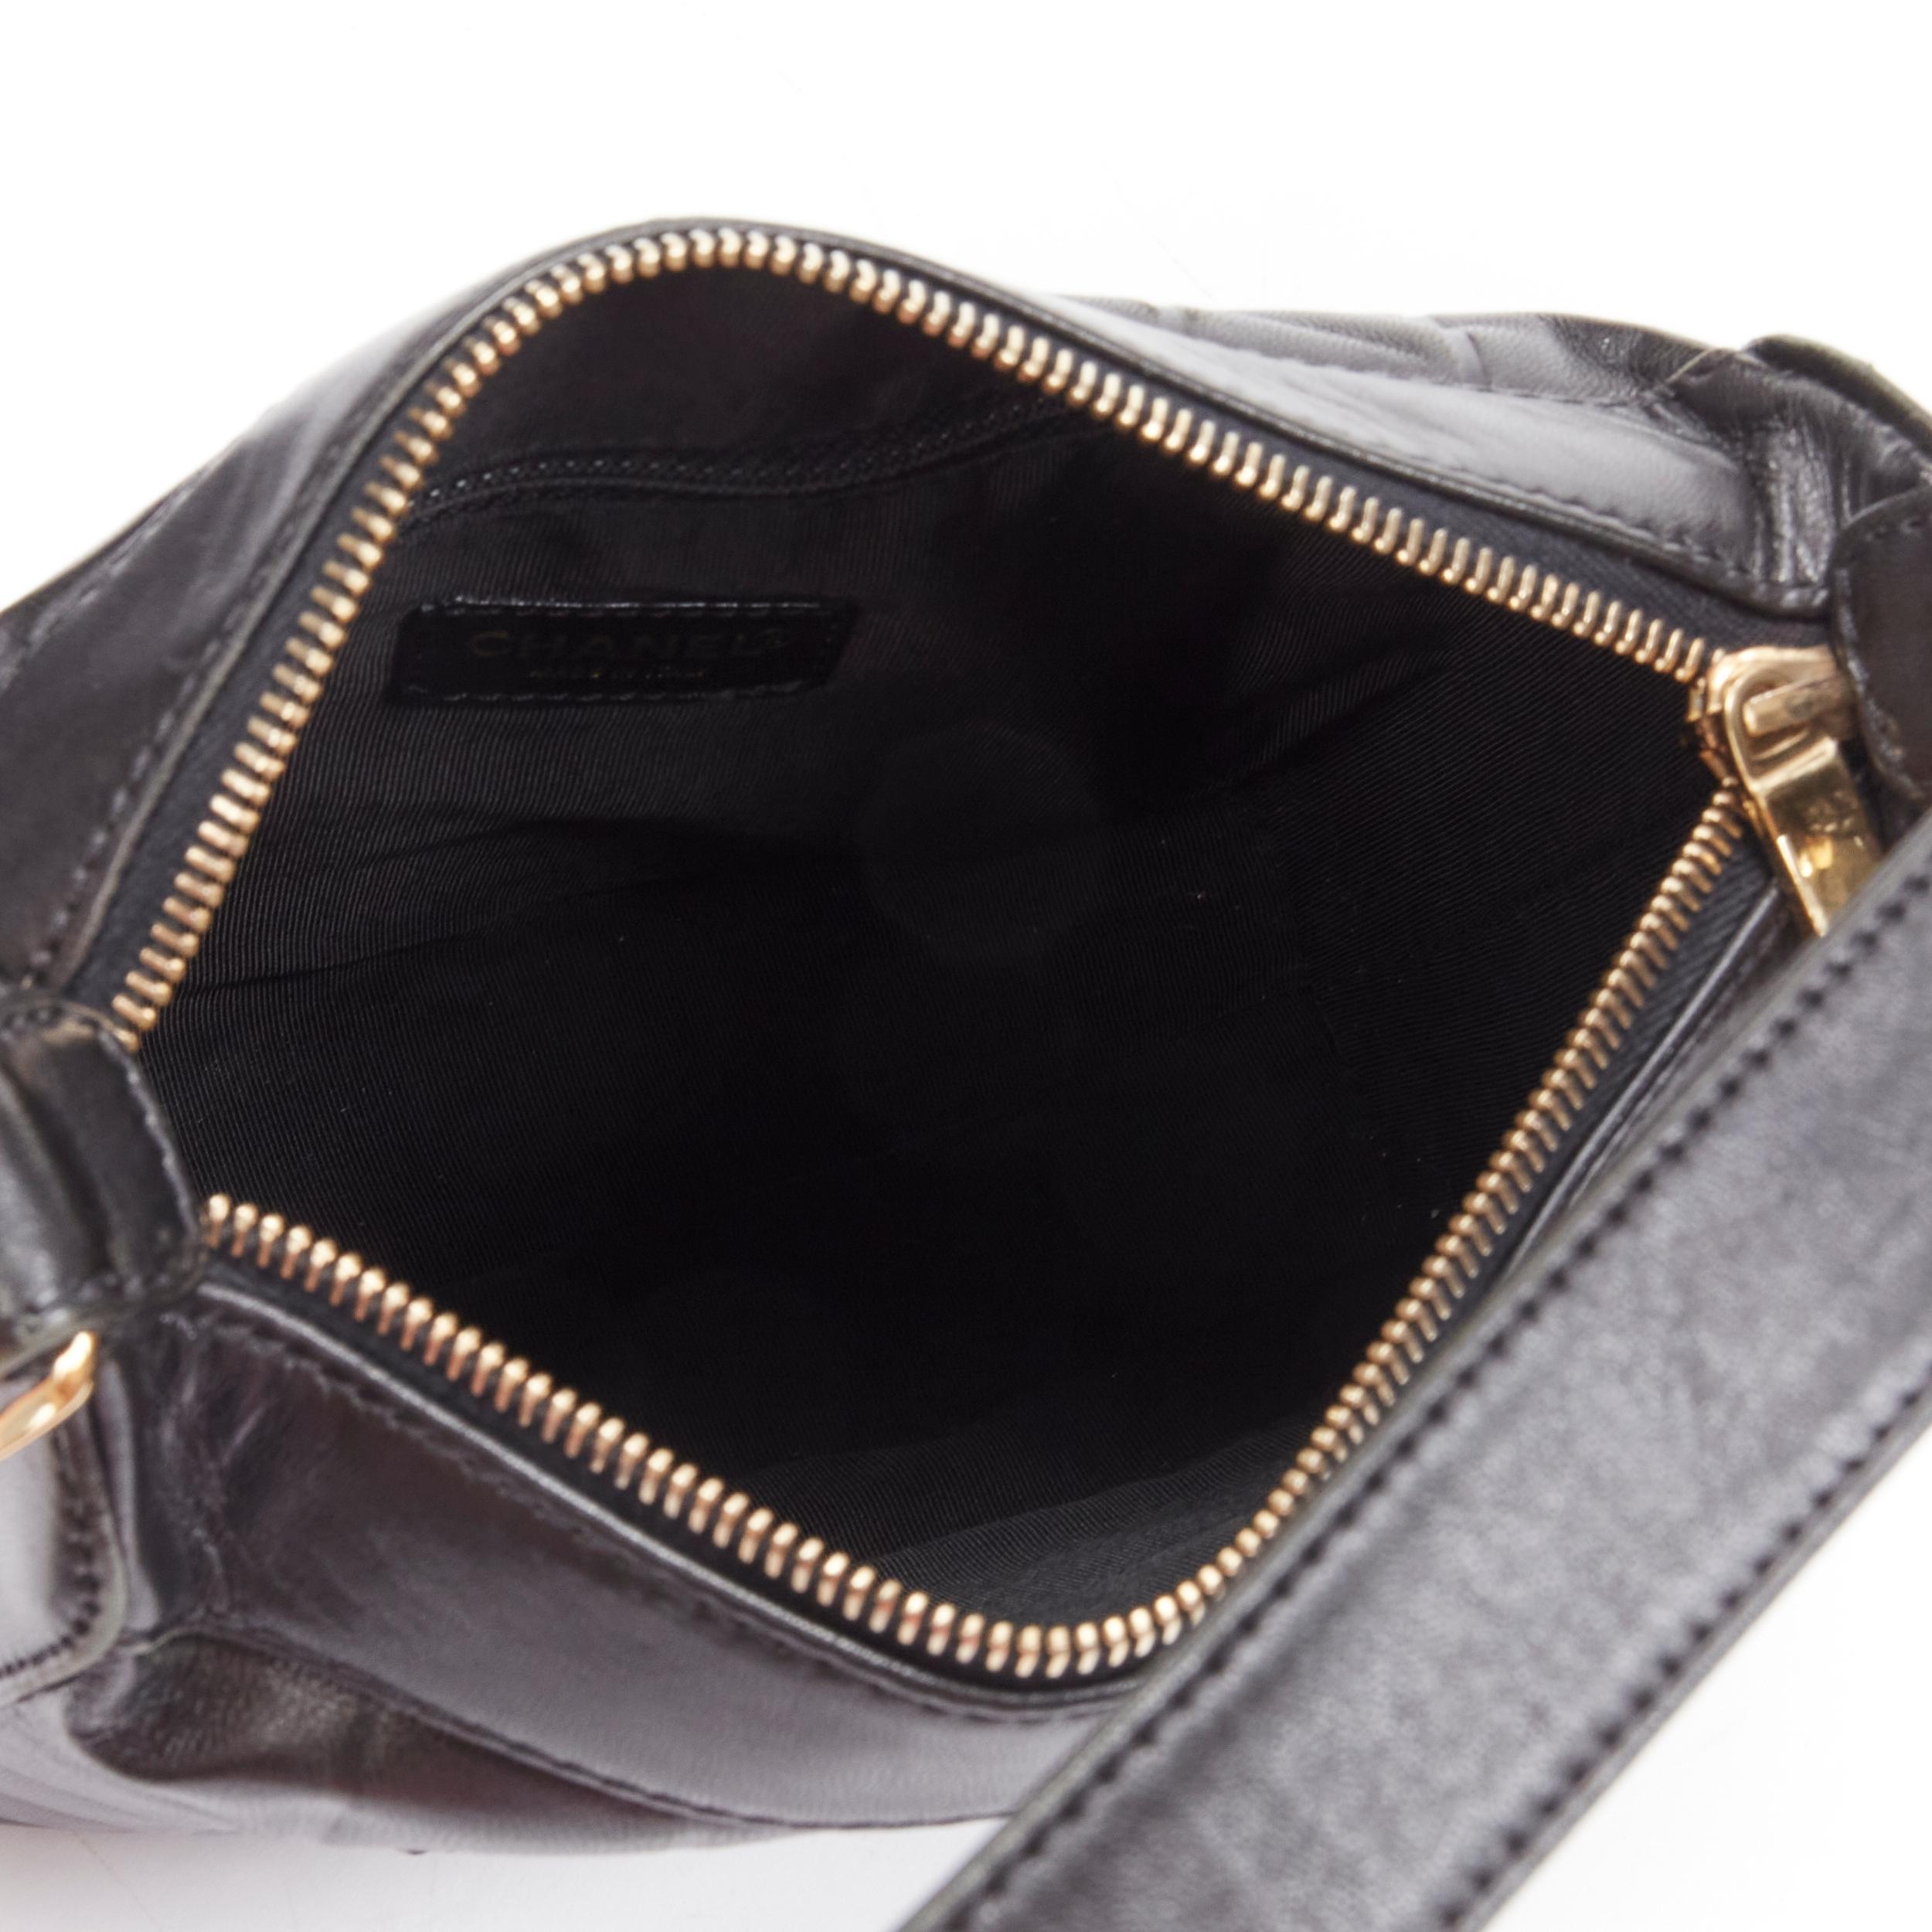 CHANEL 2003 Chocolate Bar black lambskin leather CC gold buckle shoulder bag For Sale 6